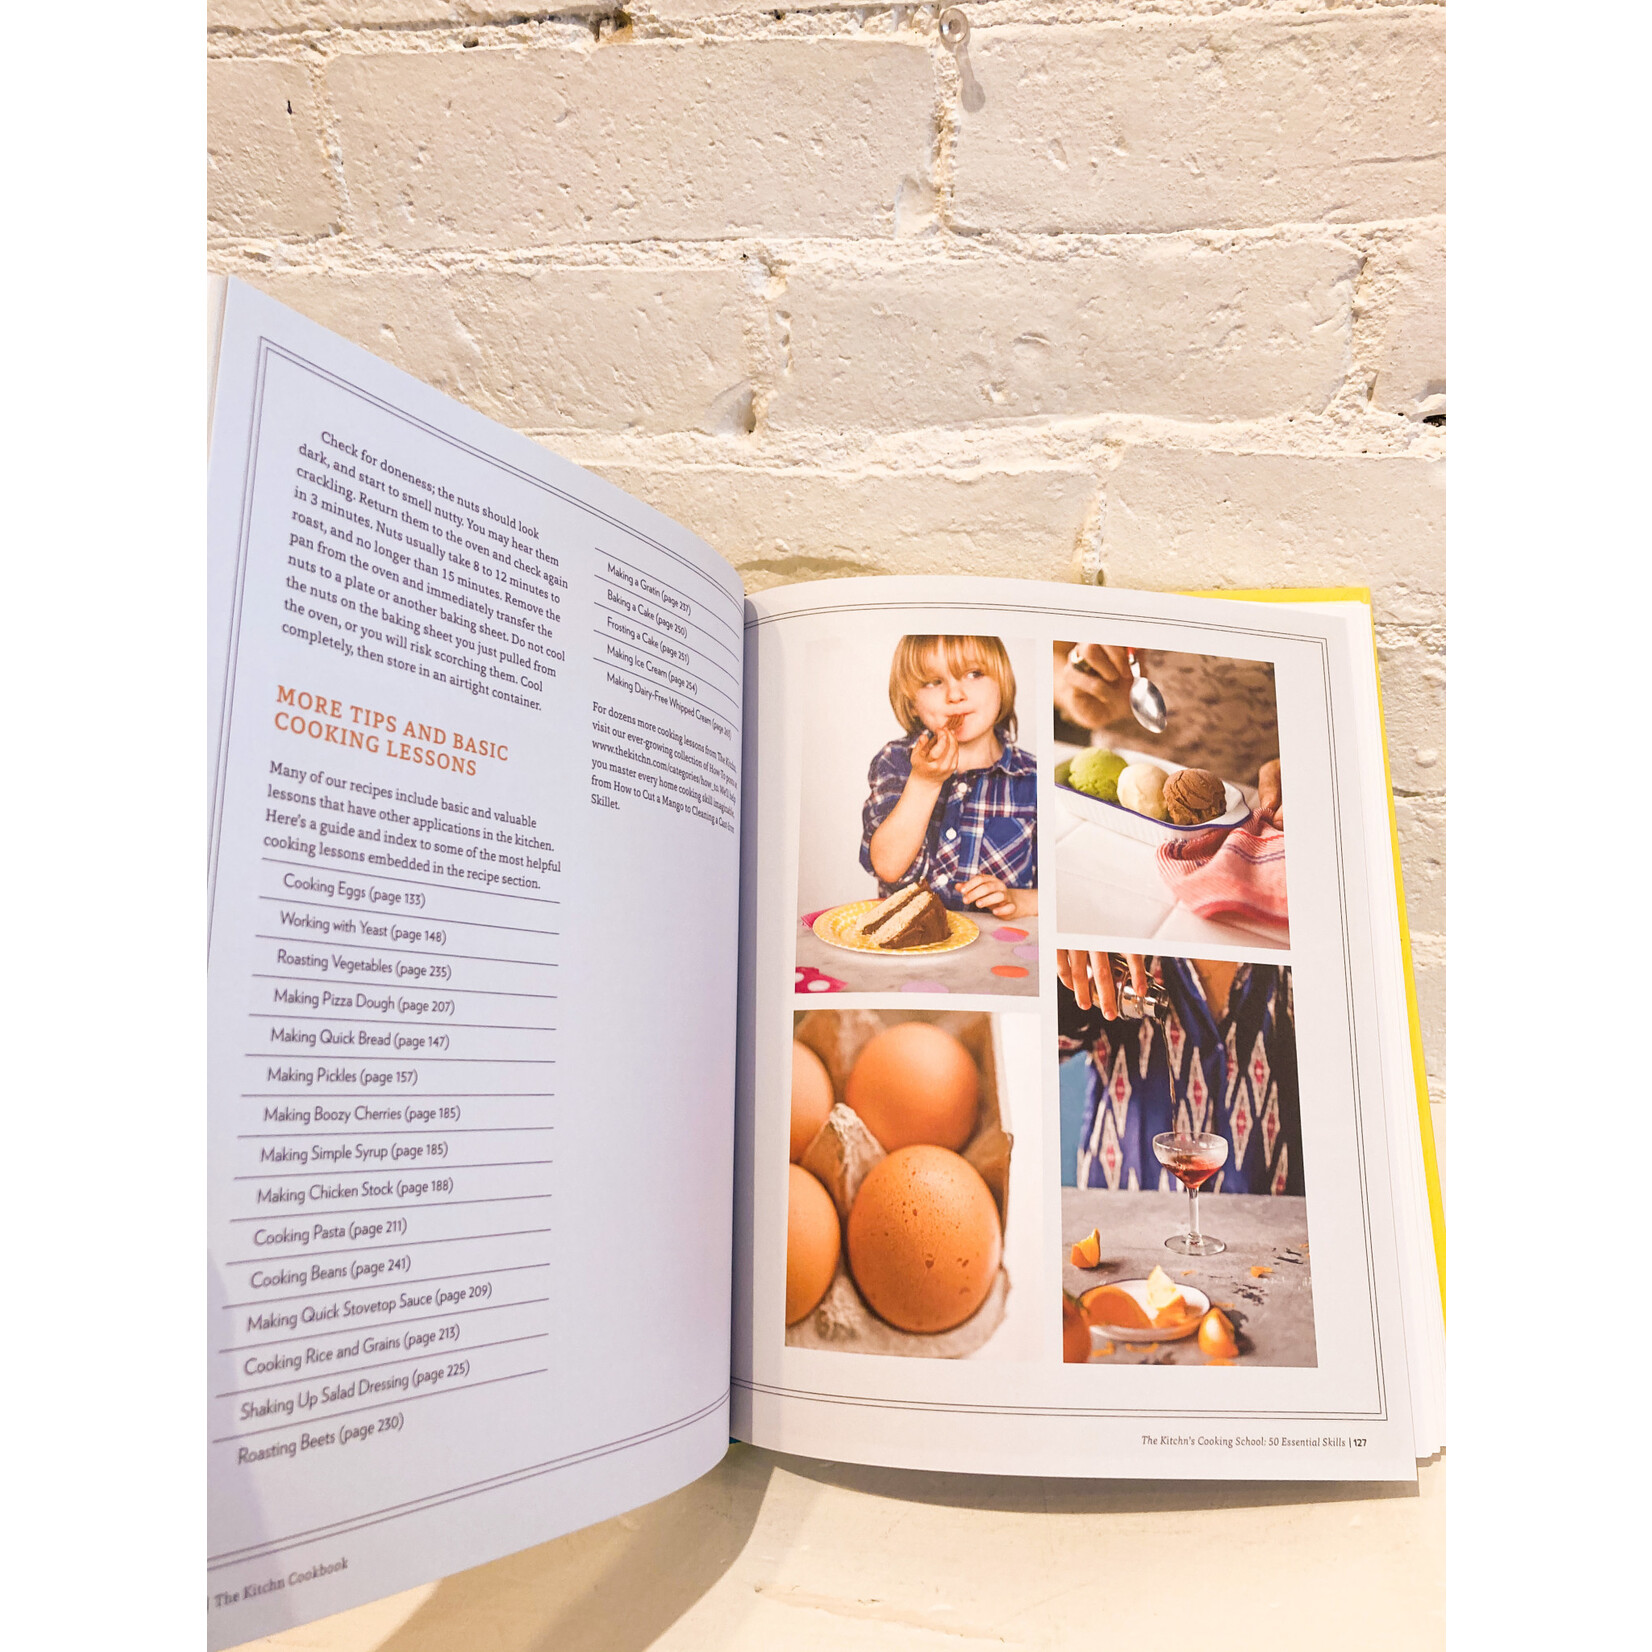 The Kitchn Cookbook by Sara Kate Gillingham & Faith Durand